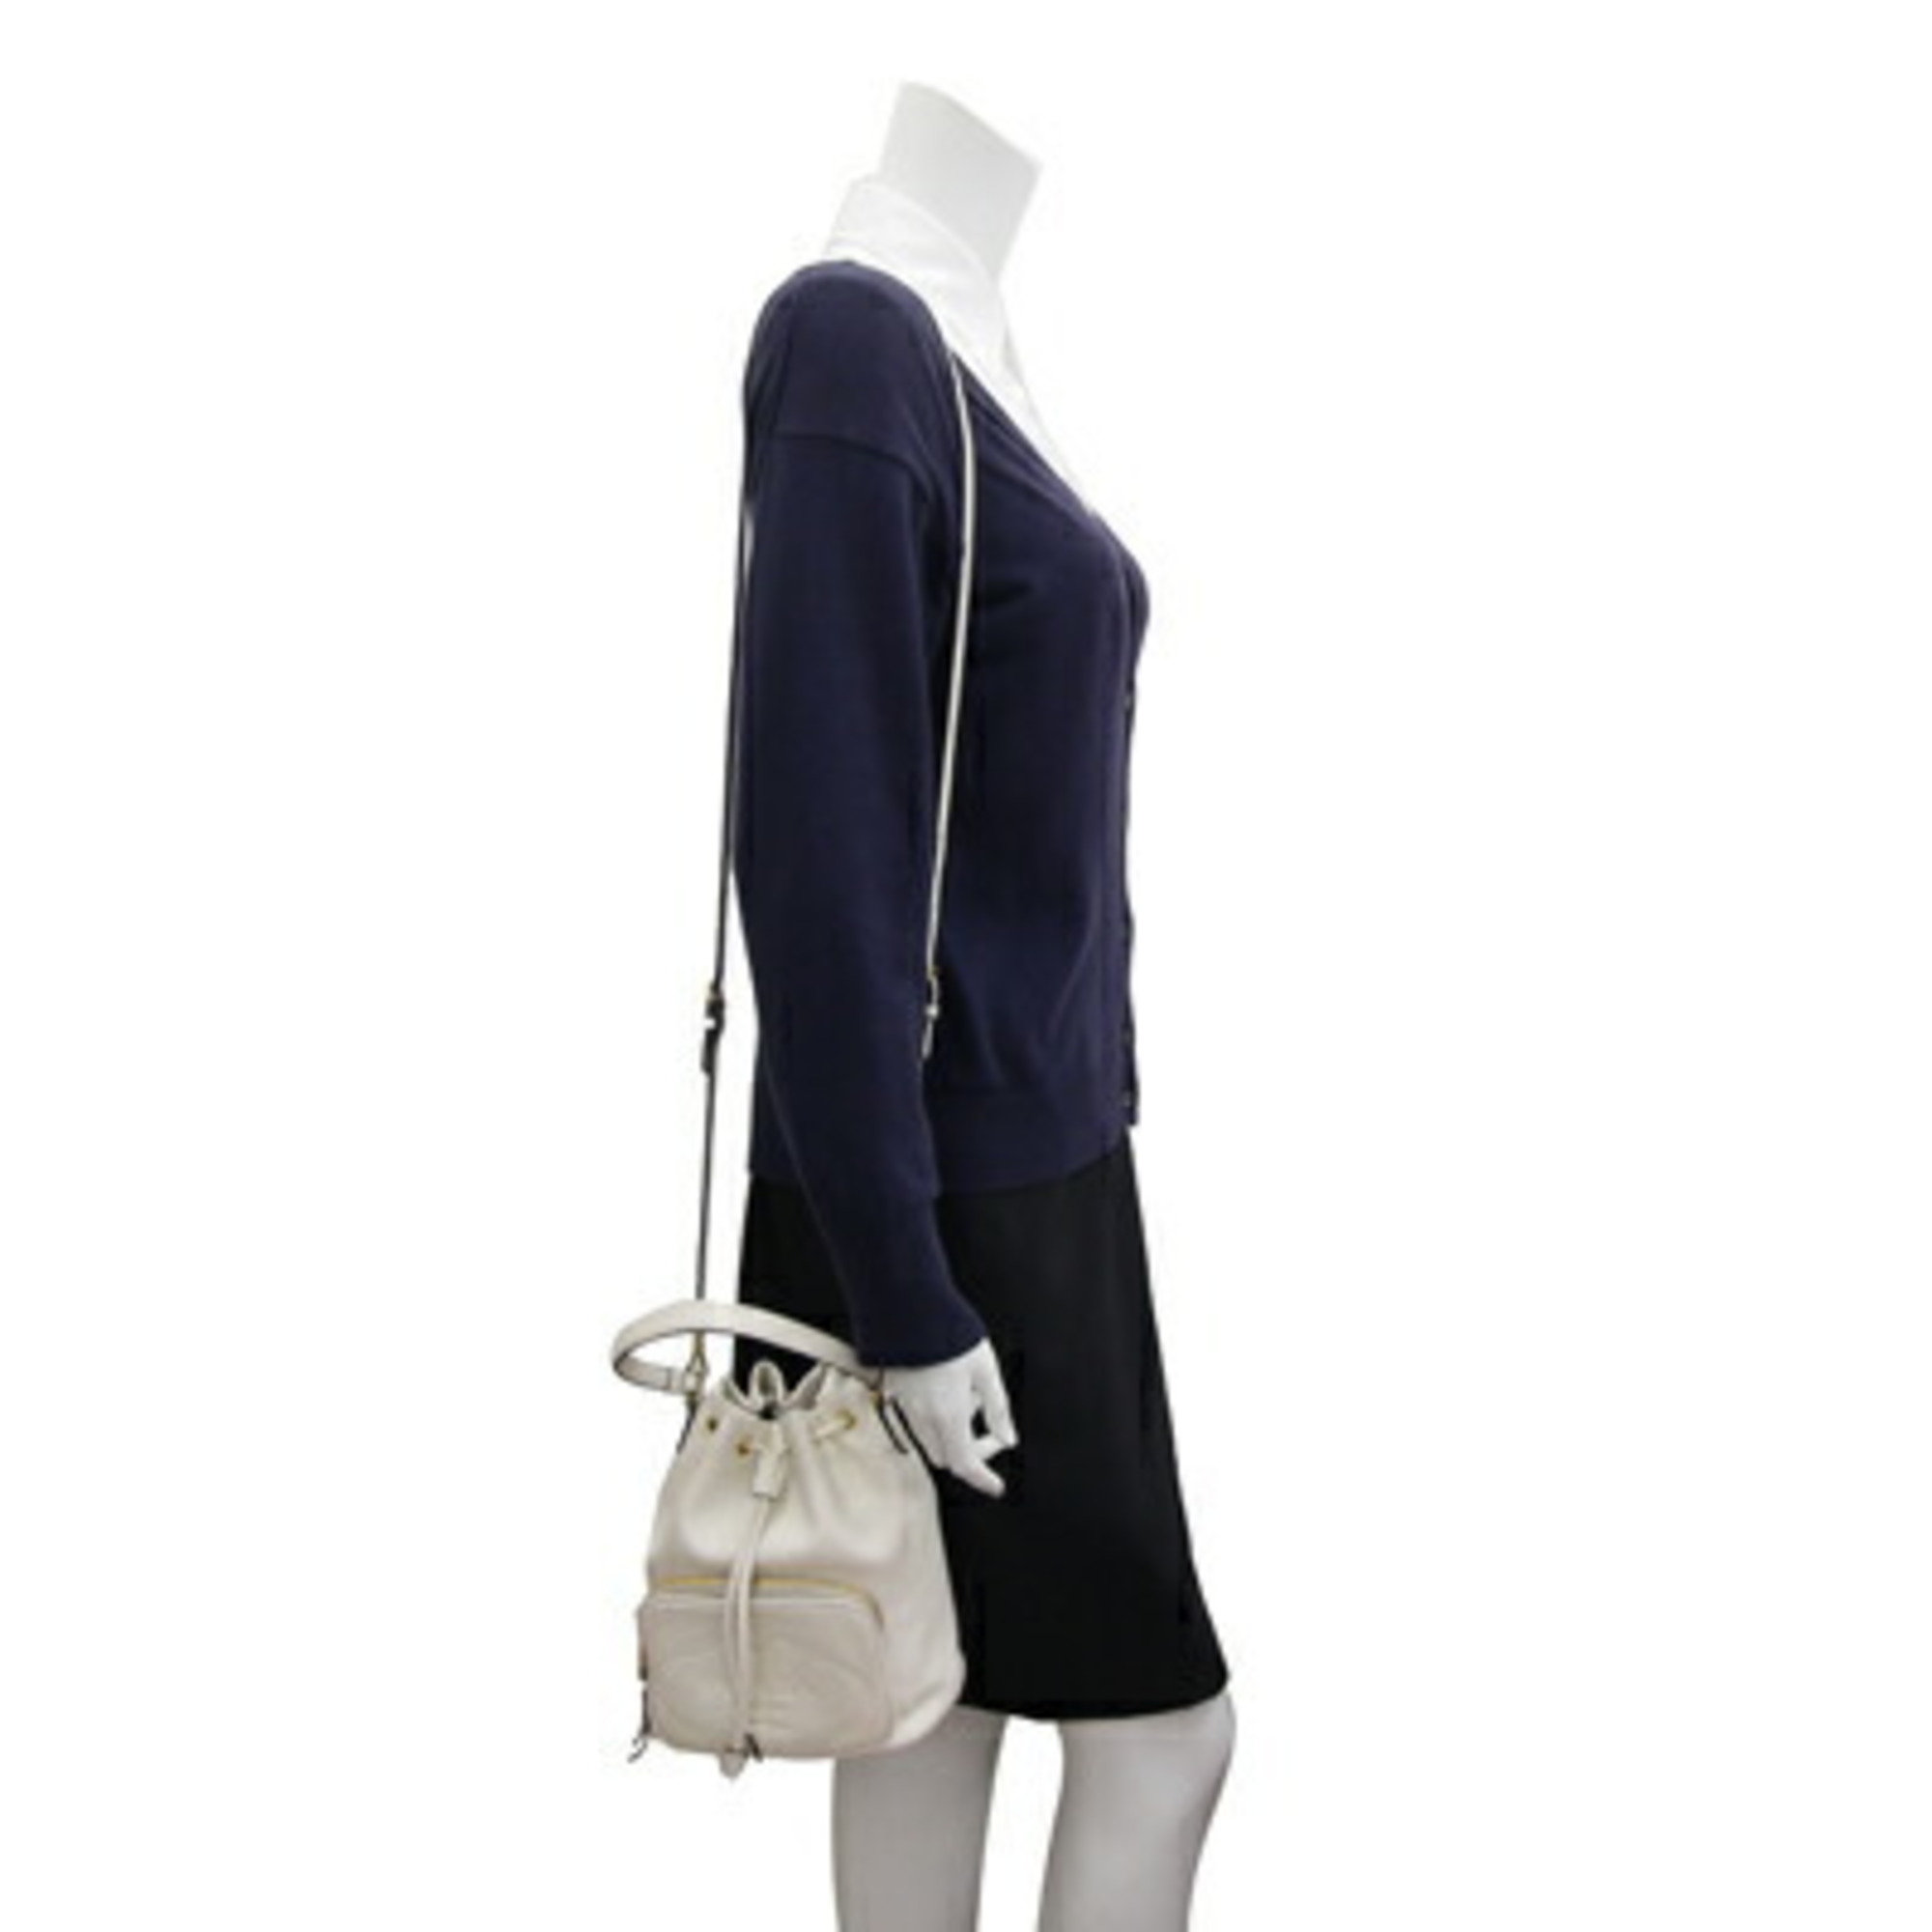 Prada handbag 1BH038 off-white leather shoulder bag ladies PRADA